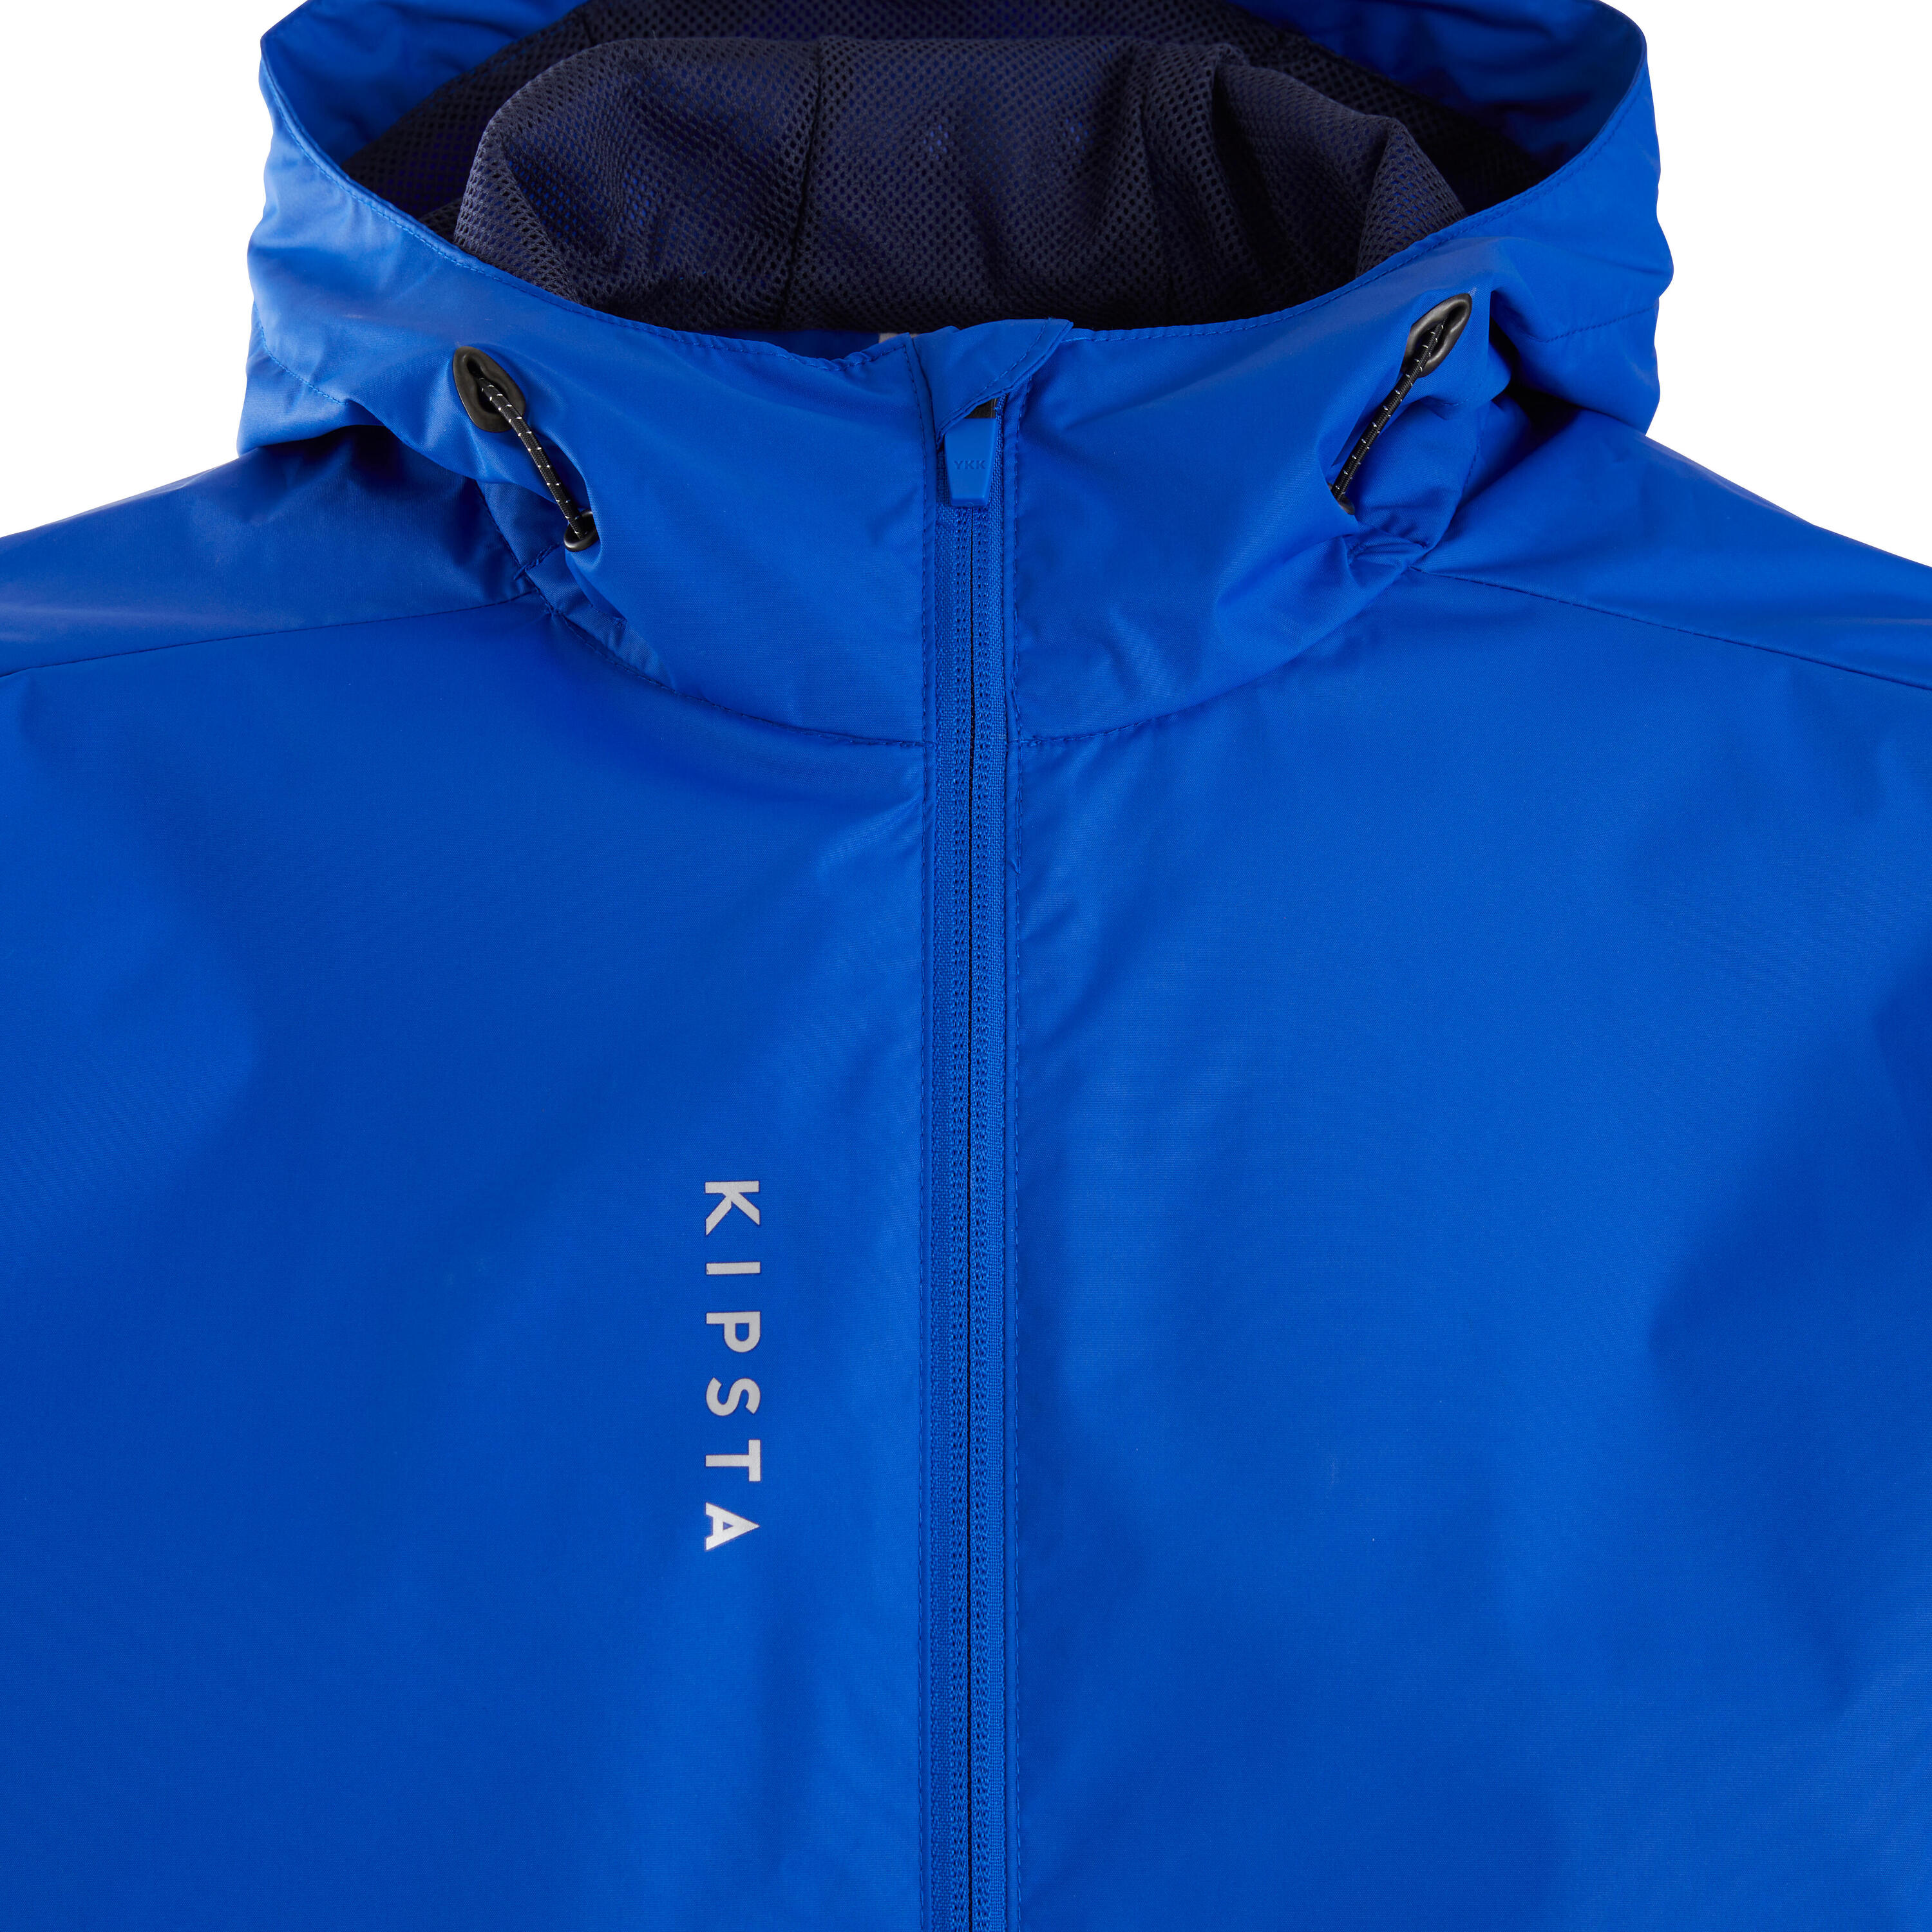 Adult Football Waterproof Jacket T100 - Blue 4/5